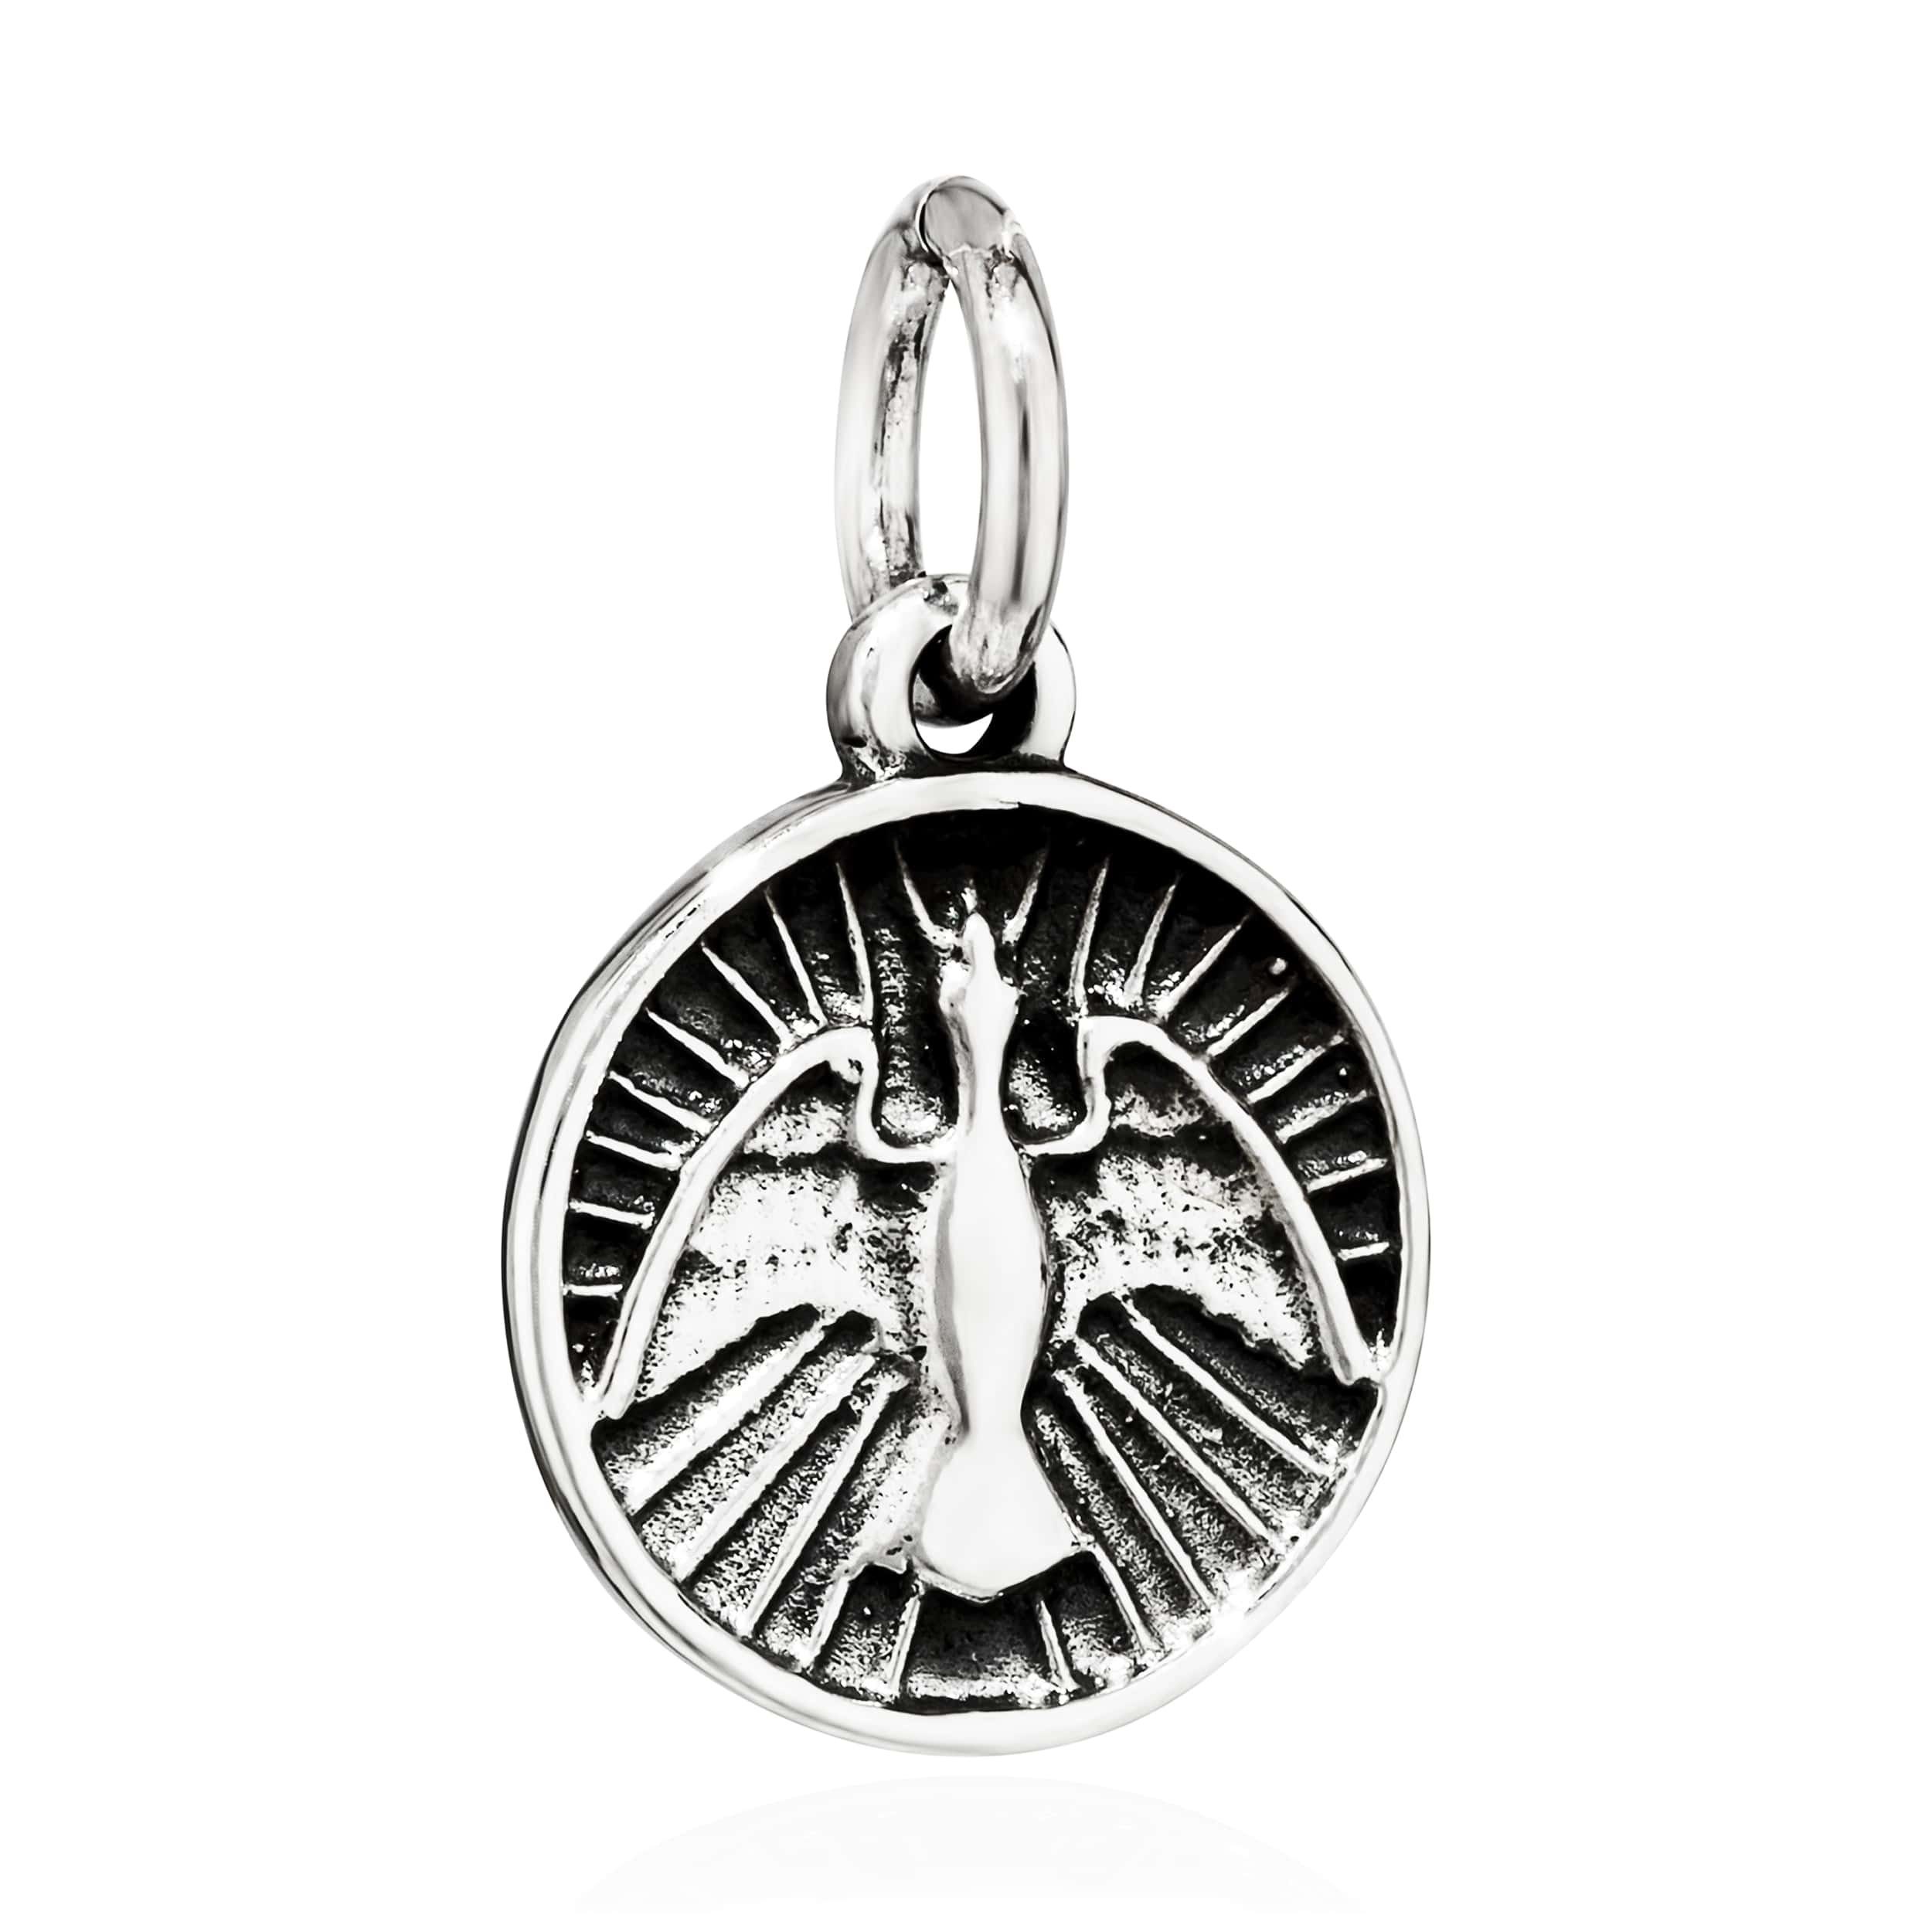 NKlaus Kettenanhänger Kettenanhänger Hoffnung und Paloma Symbol Silber der Friedenstaube 925